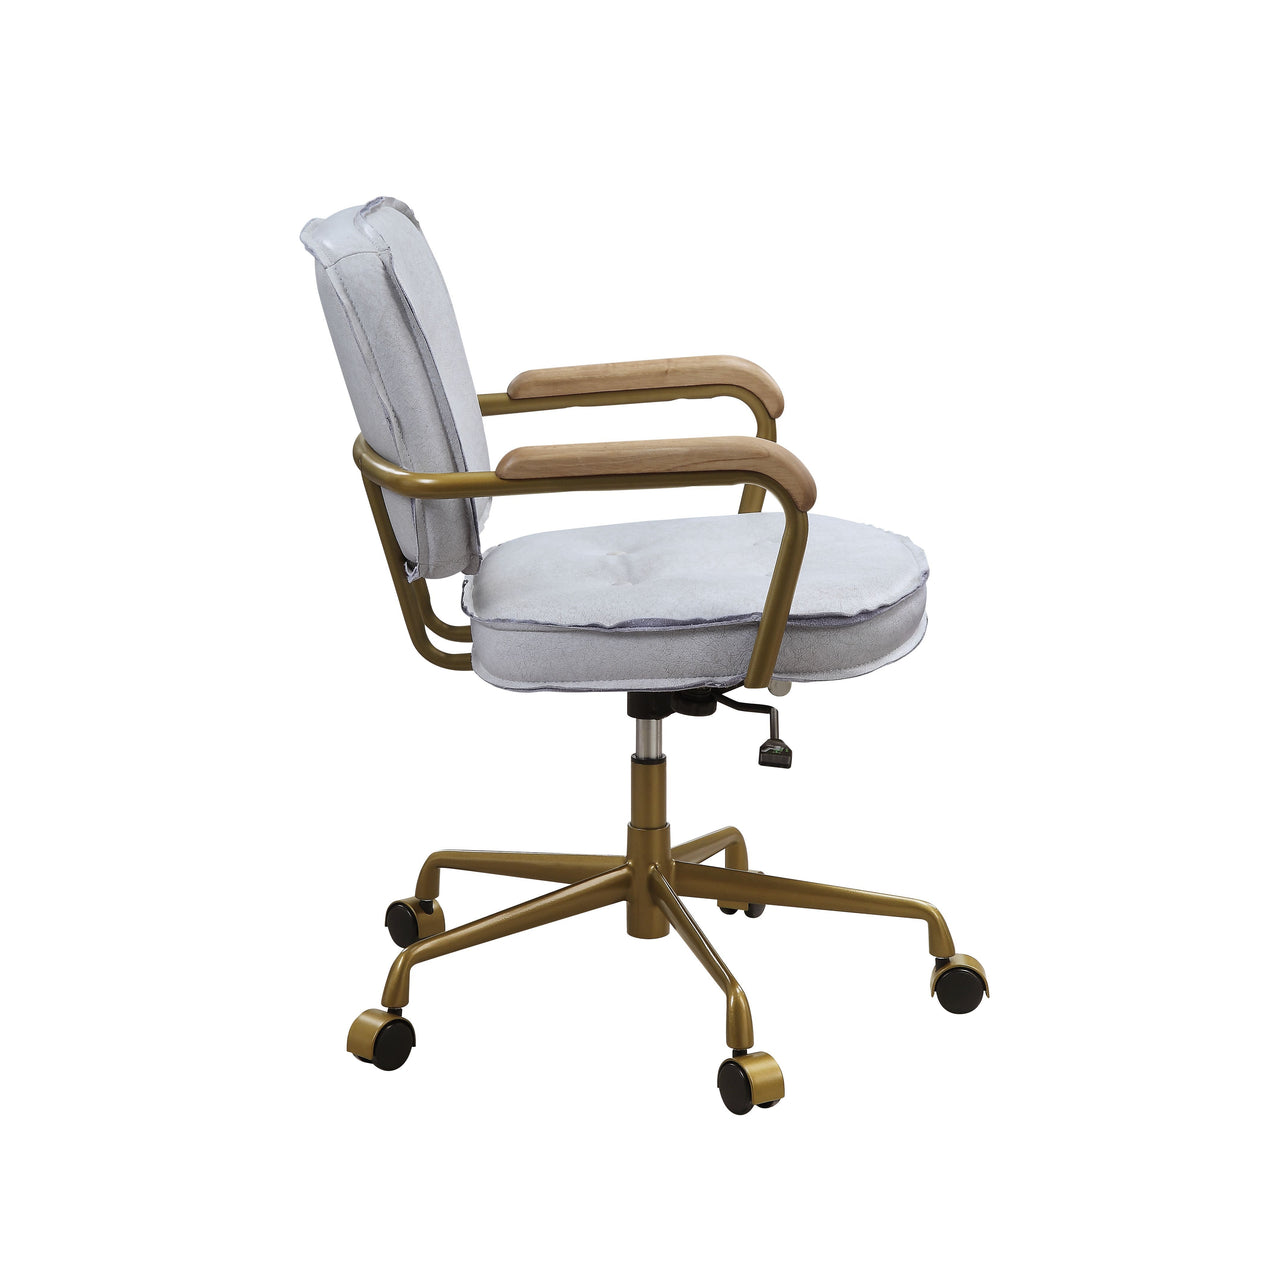 Siecross - Office Chair - Tony's Home Furnishings